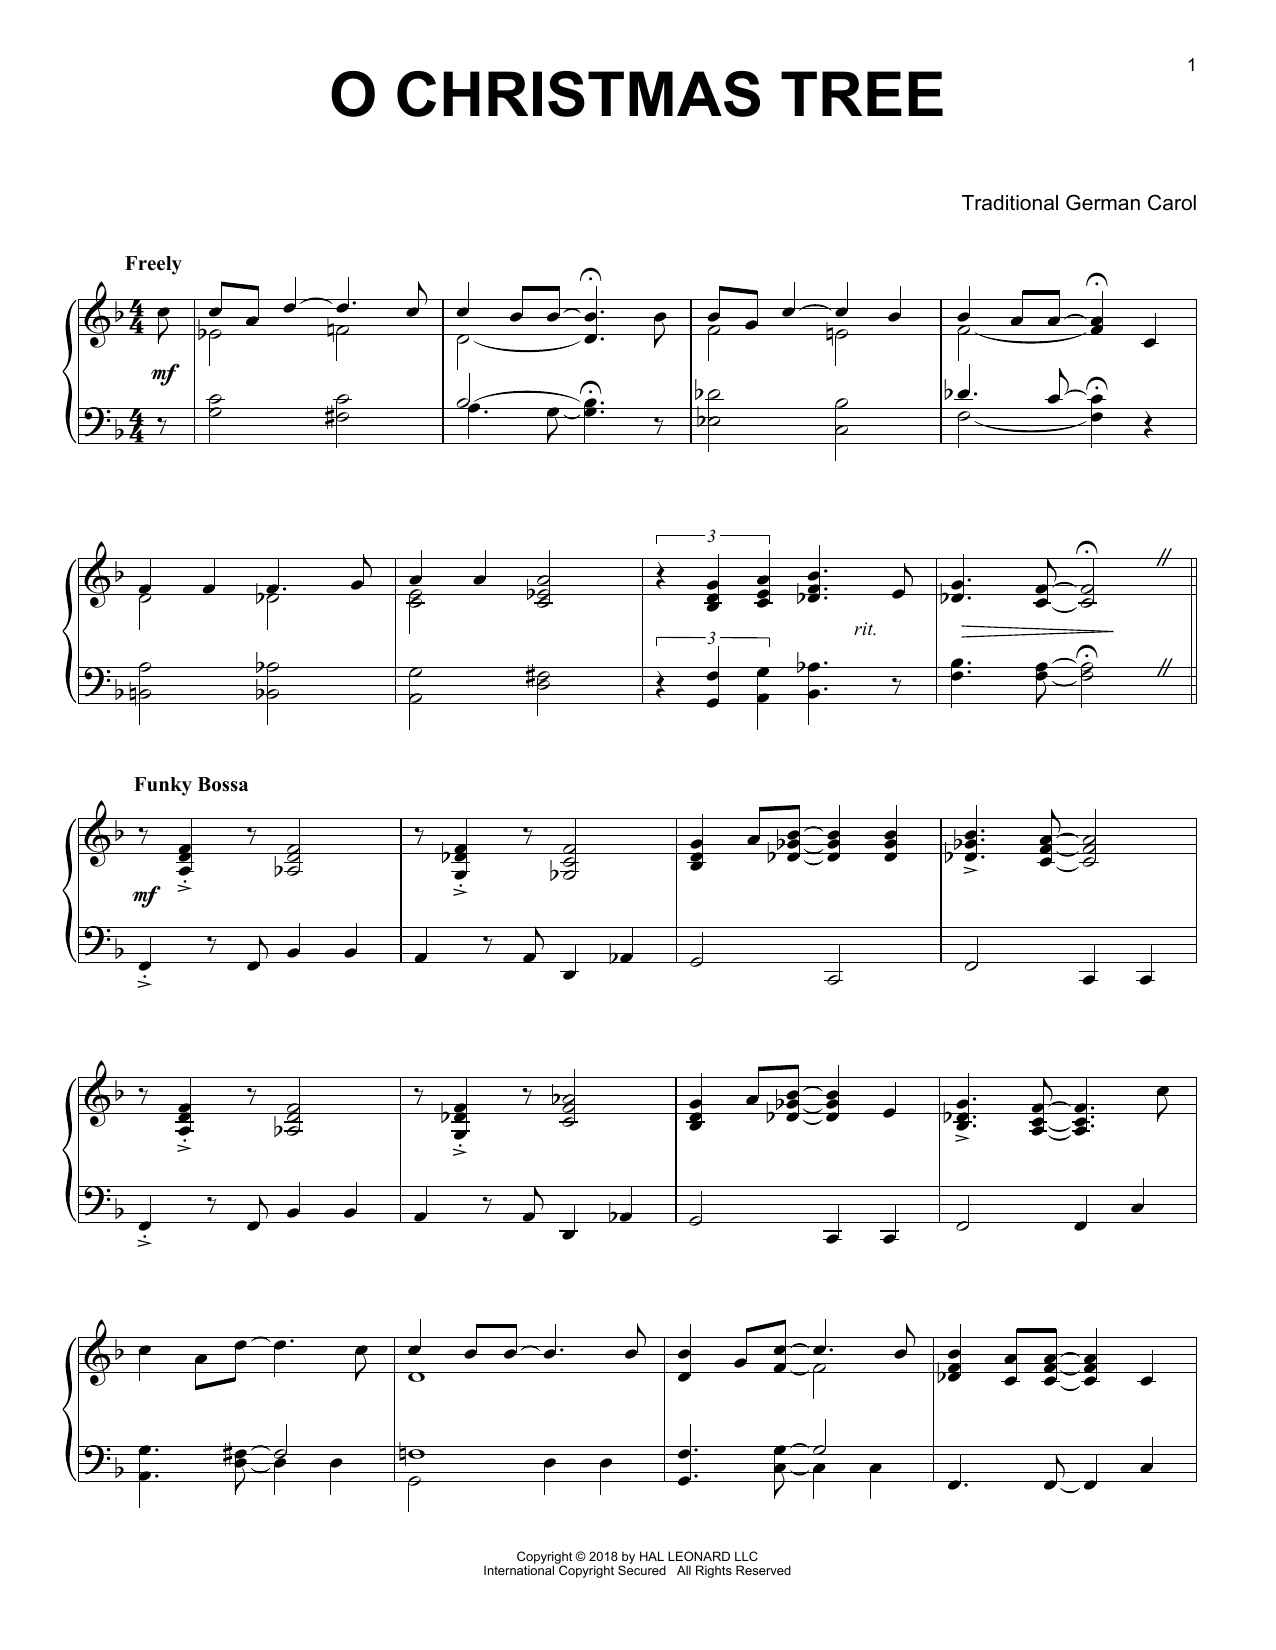 Traditional German Carol O Christmas Tree [Jazz version] Sheet Music Notes & Chords for Piano - Download or Print PDF